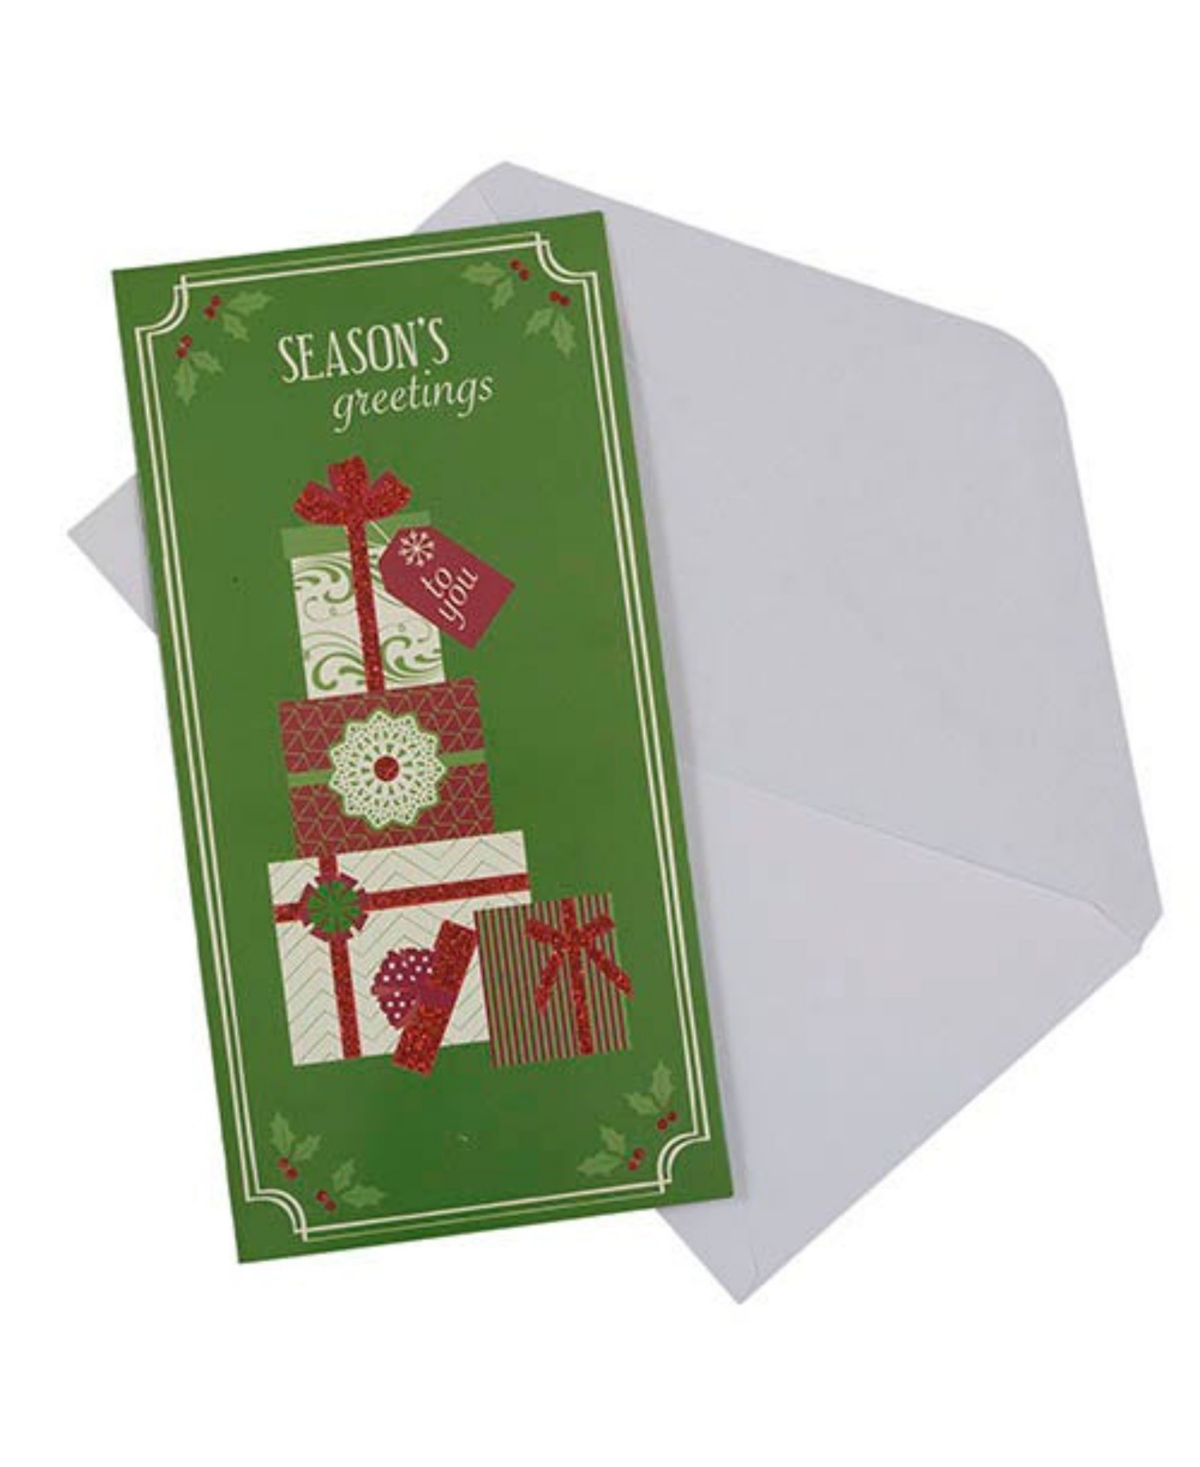 Jam Paper Christmas Money Cards Matching Envelopes Set In Season's Greetings Gifts